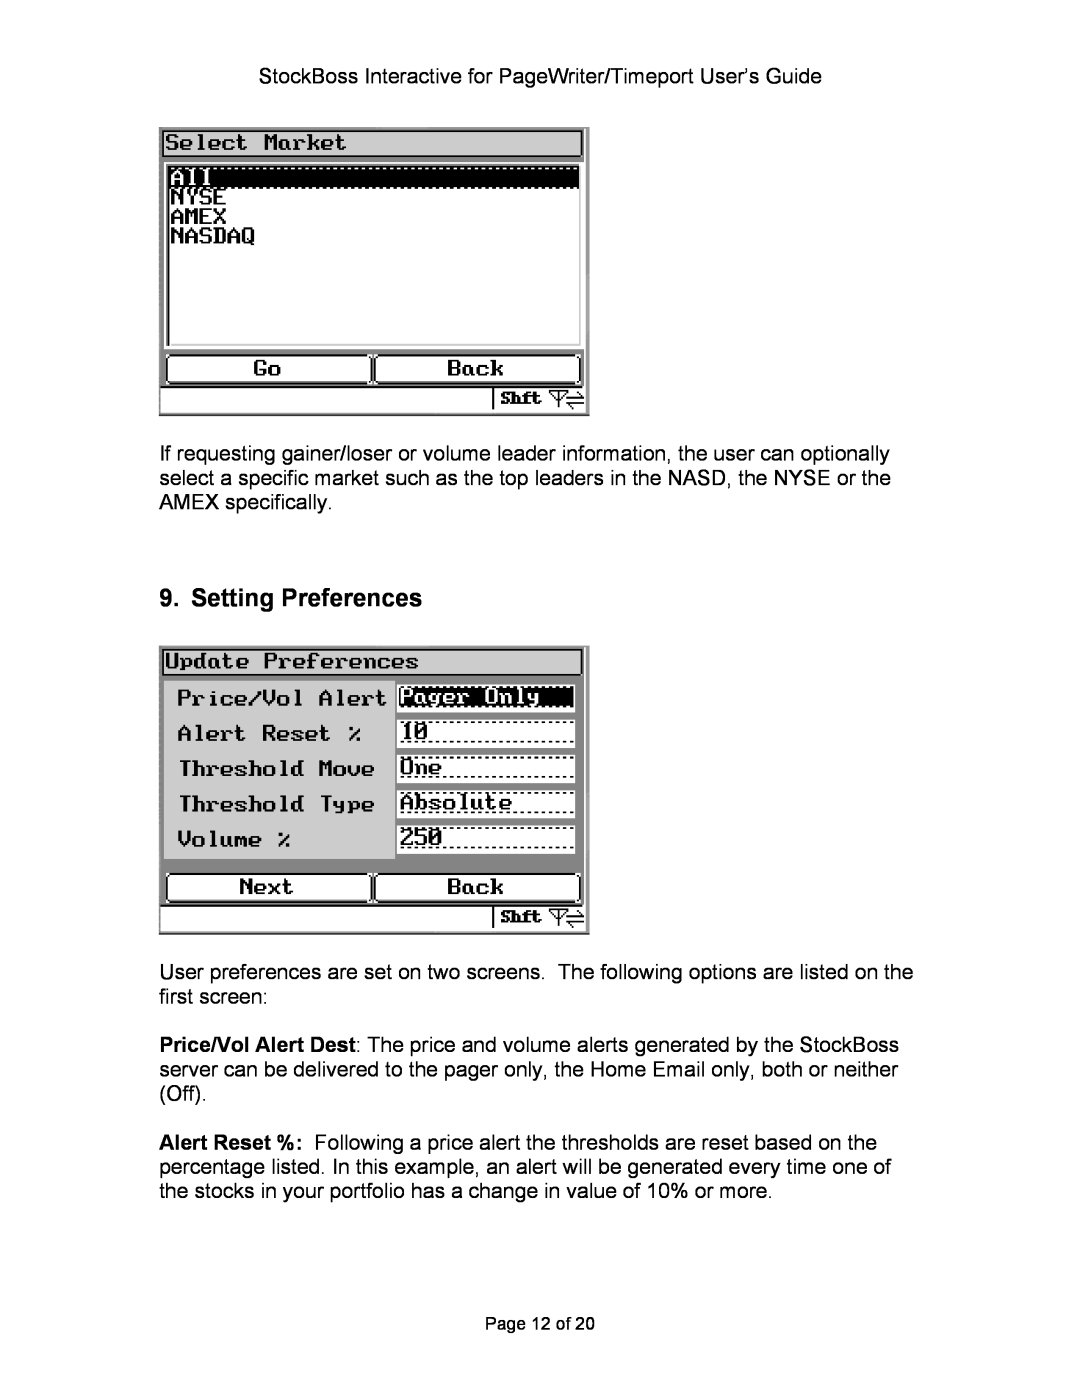 Motorola P930 Series manual Setting Preferences, Page 12 of 